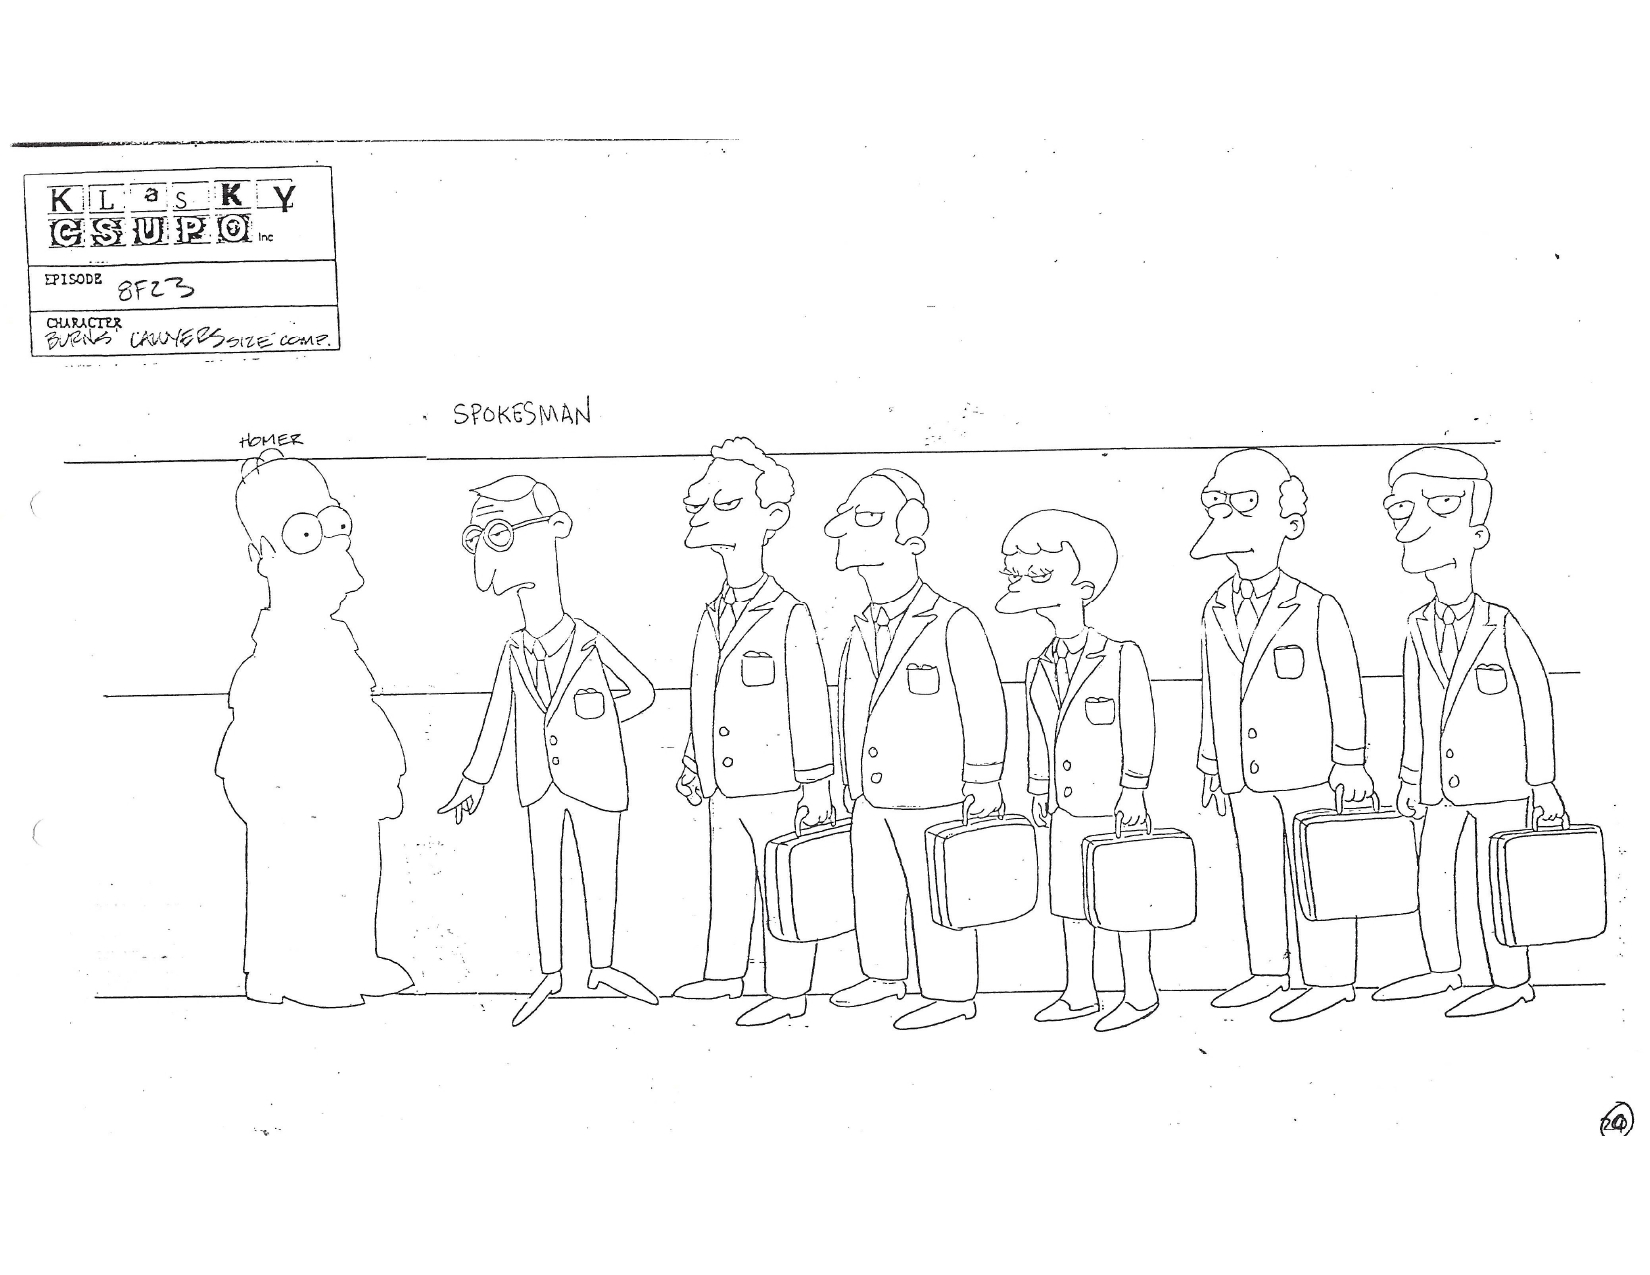 Simpsons Production Art On Twitter Heres The Model Sheet For Burns